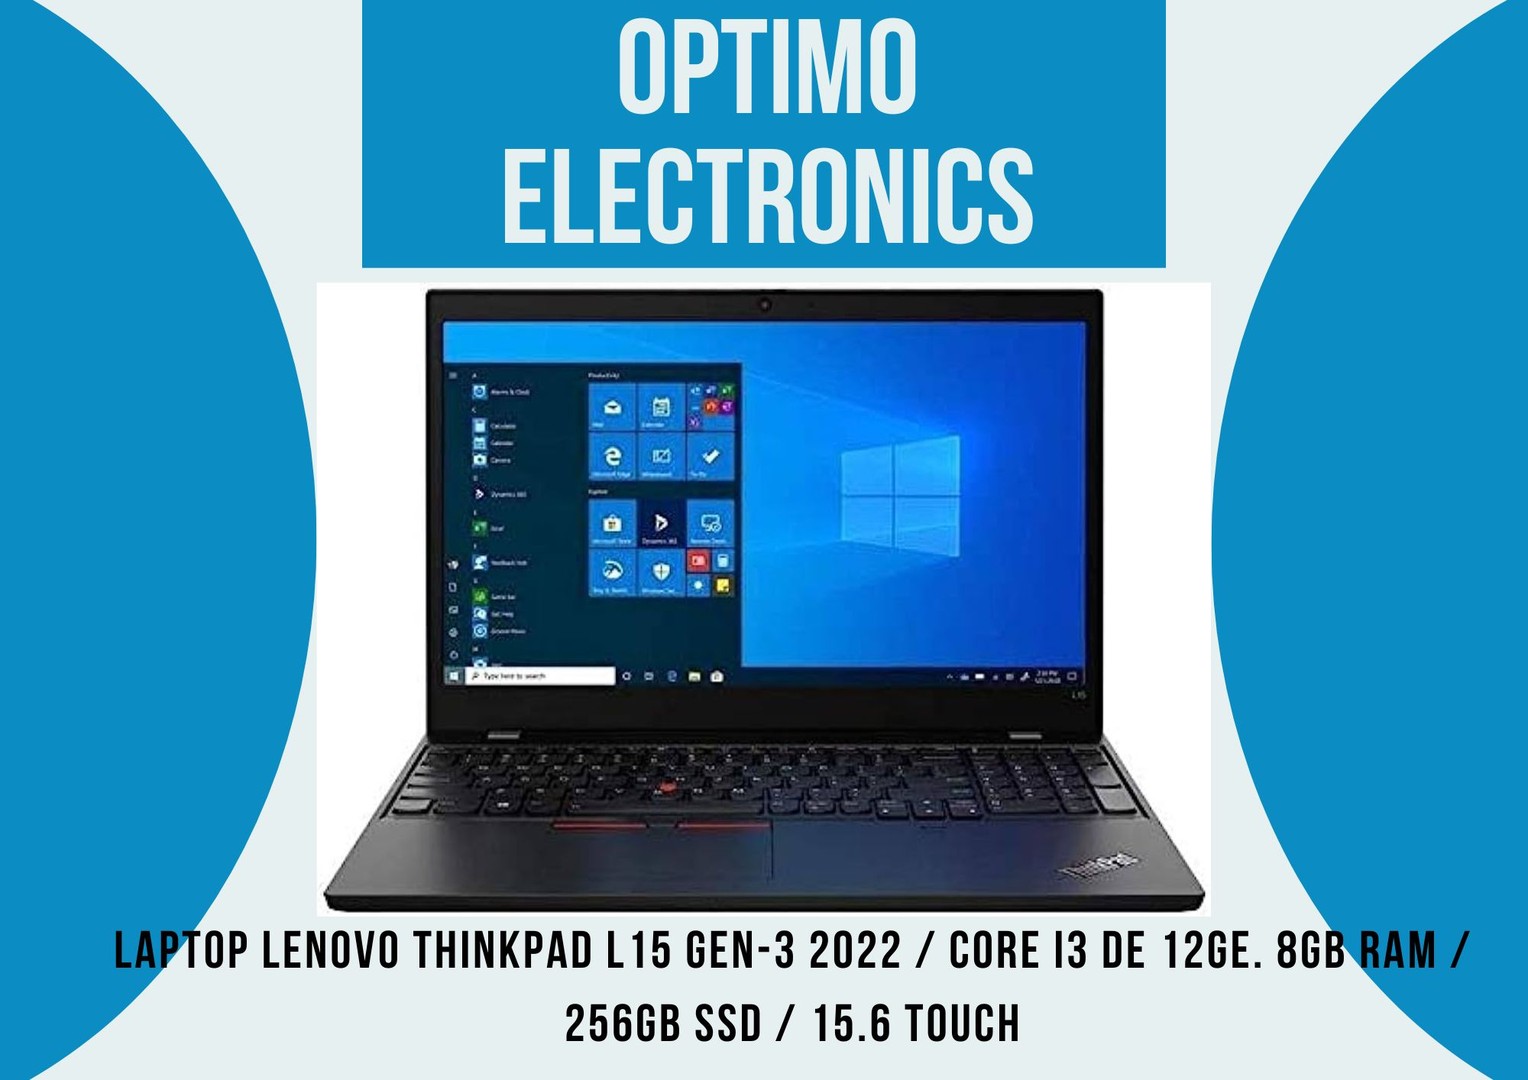 computadoras y laptops - LAPTOP LENOVO THINKPAD L15 GEN-3 2022 / CORE I3 DE 12GE. 8GB RAM / 256GB SSD / 1